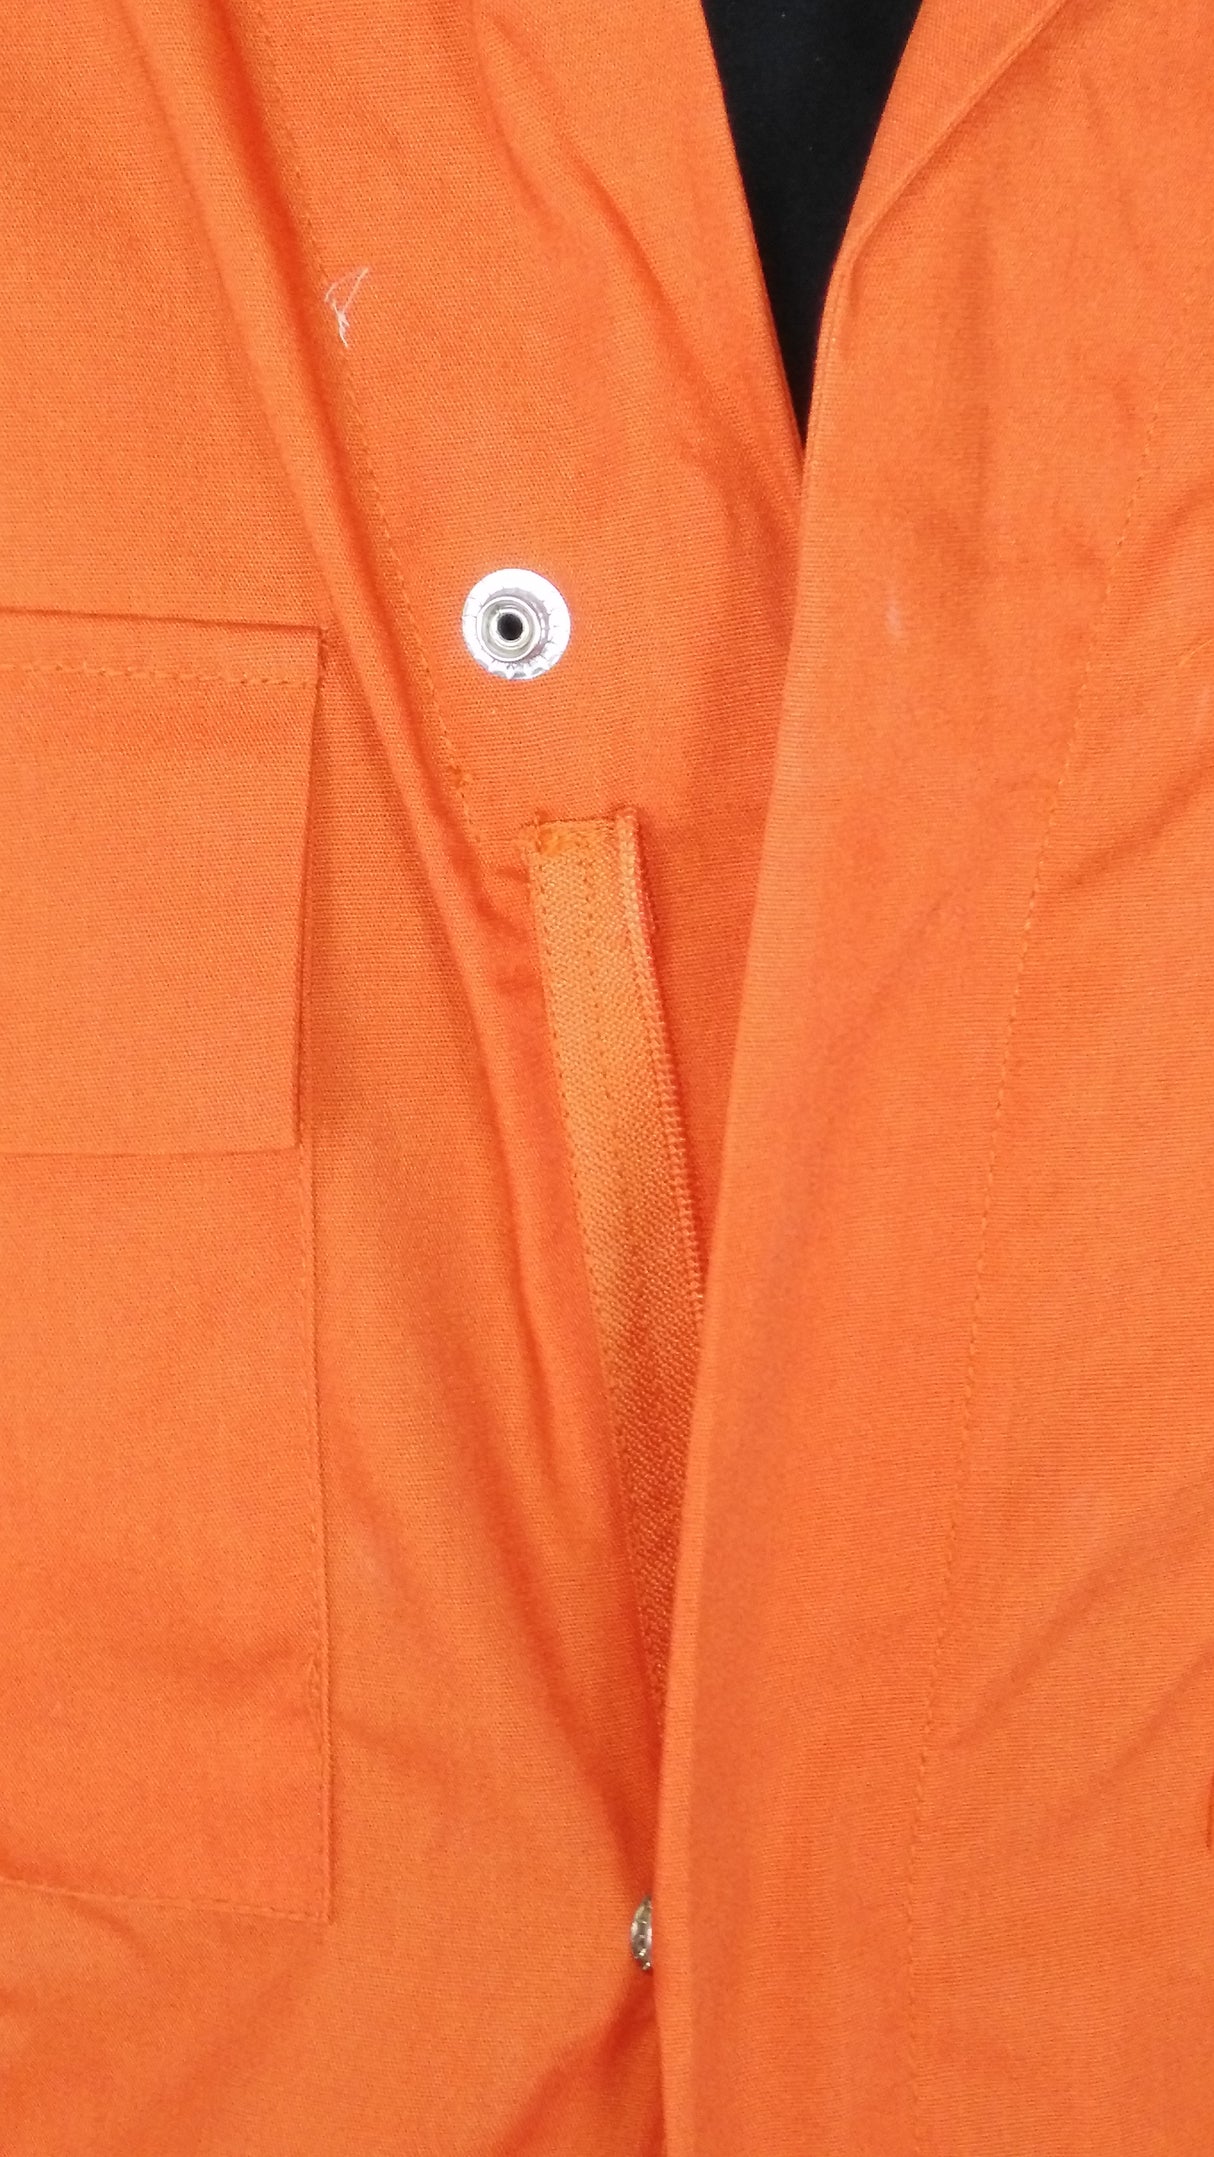 Short Sleeve Orange Lightweight Polycotton Multi-Pocket Coverall